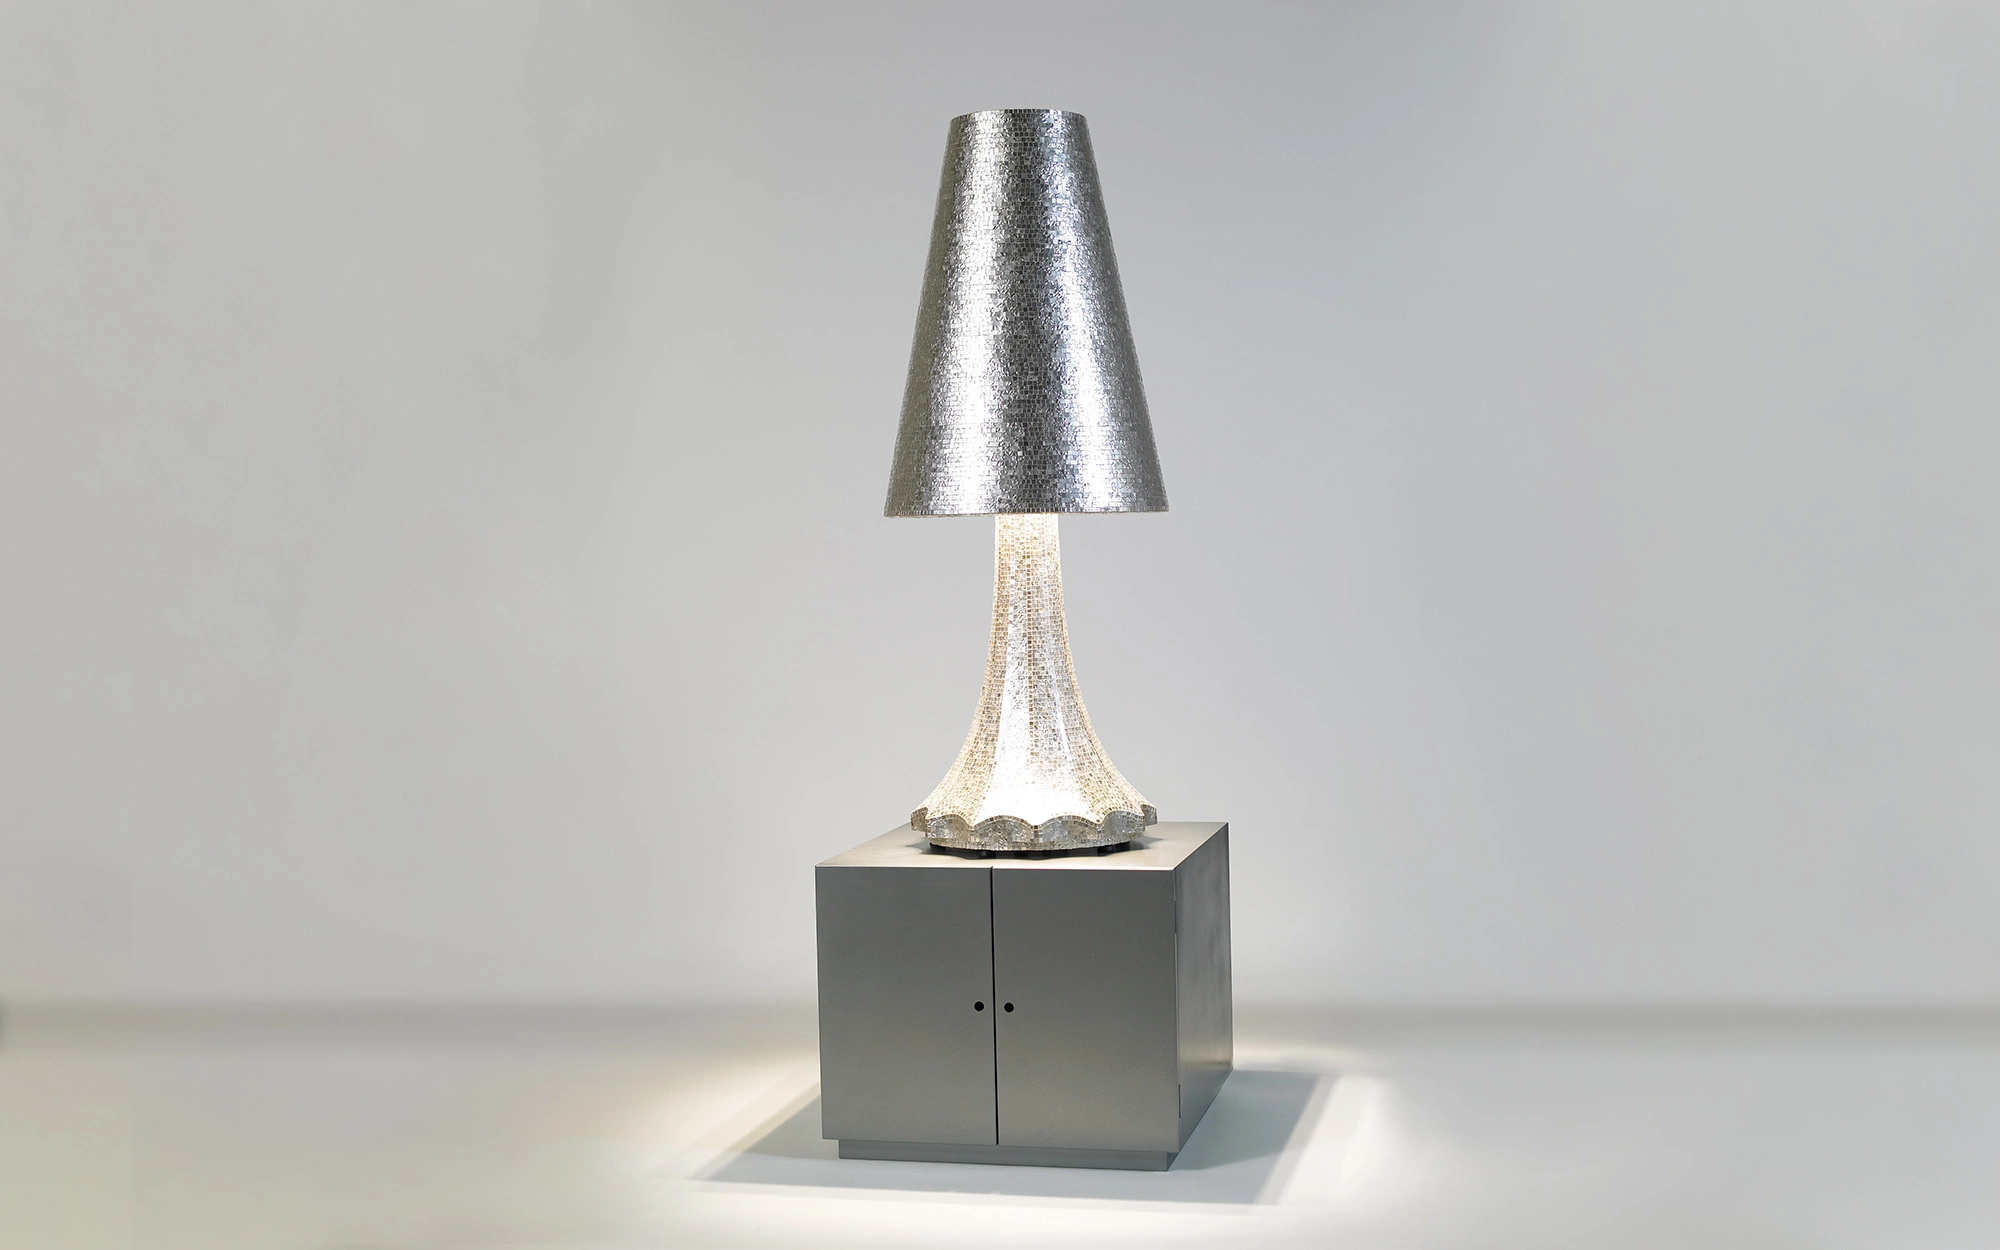 Lampada white gold - Alessandro Mendini - Table - Galerie kreo